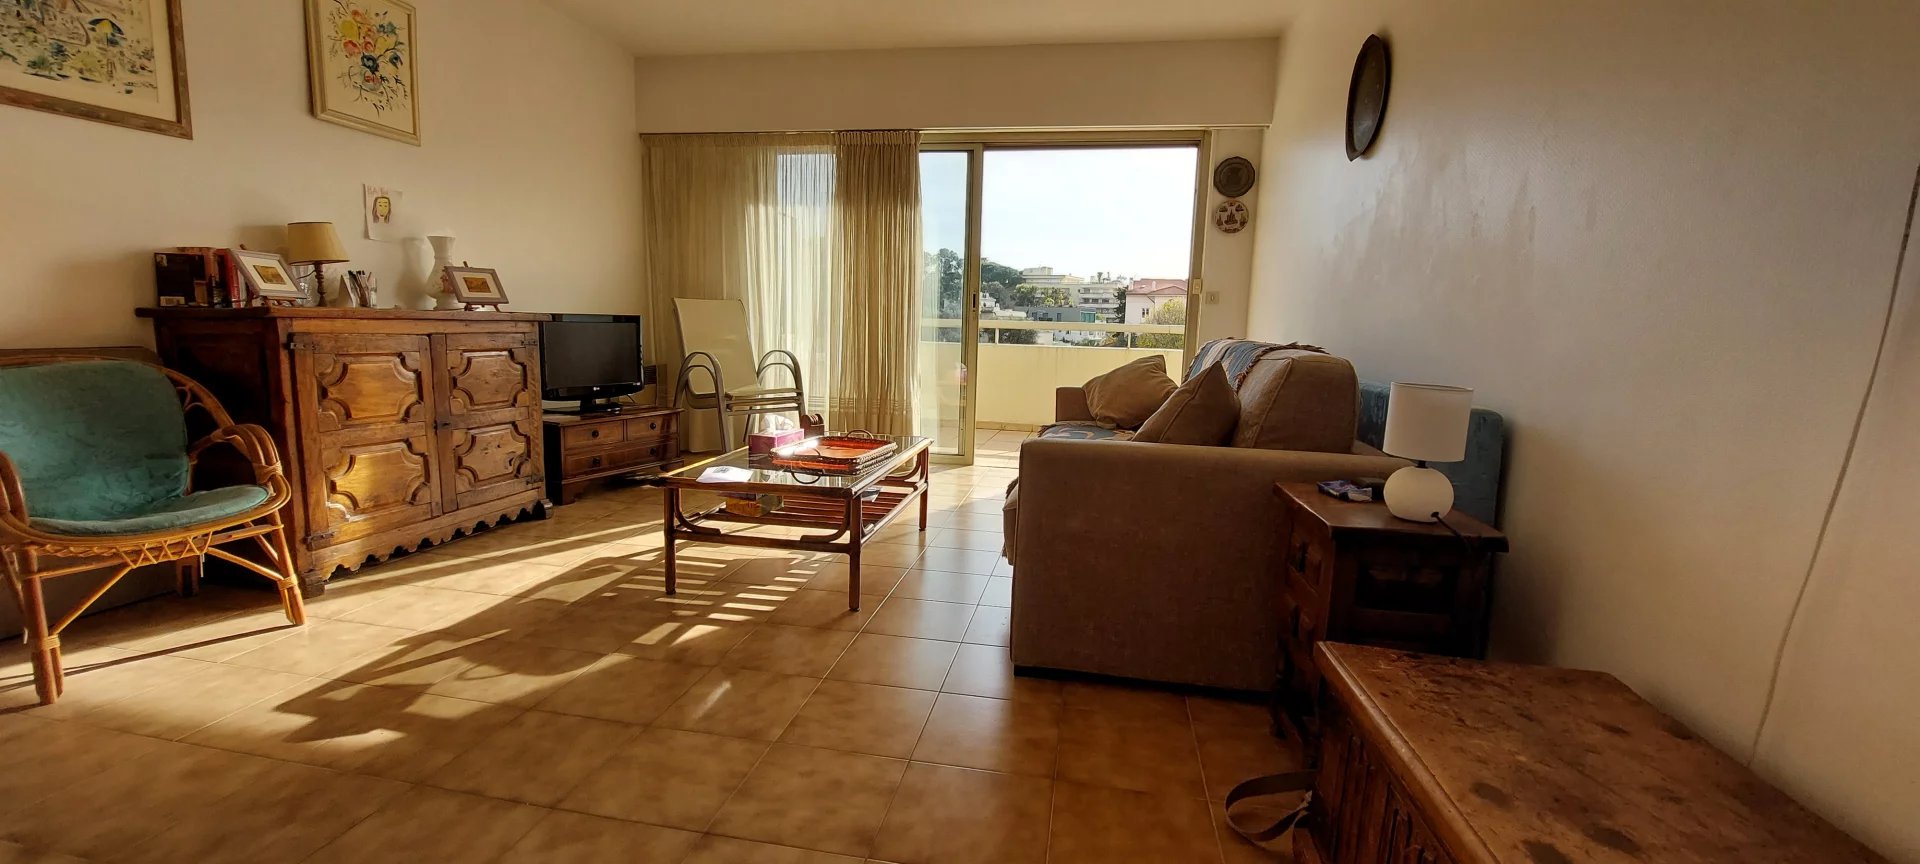 Sale Apartment - Antibes